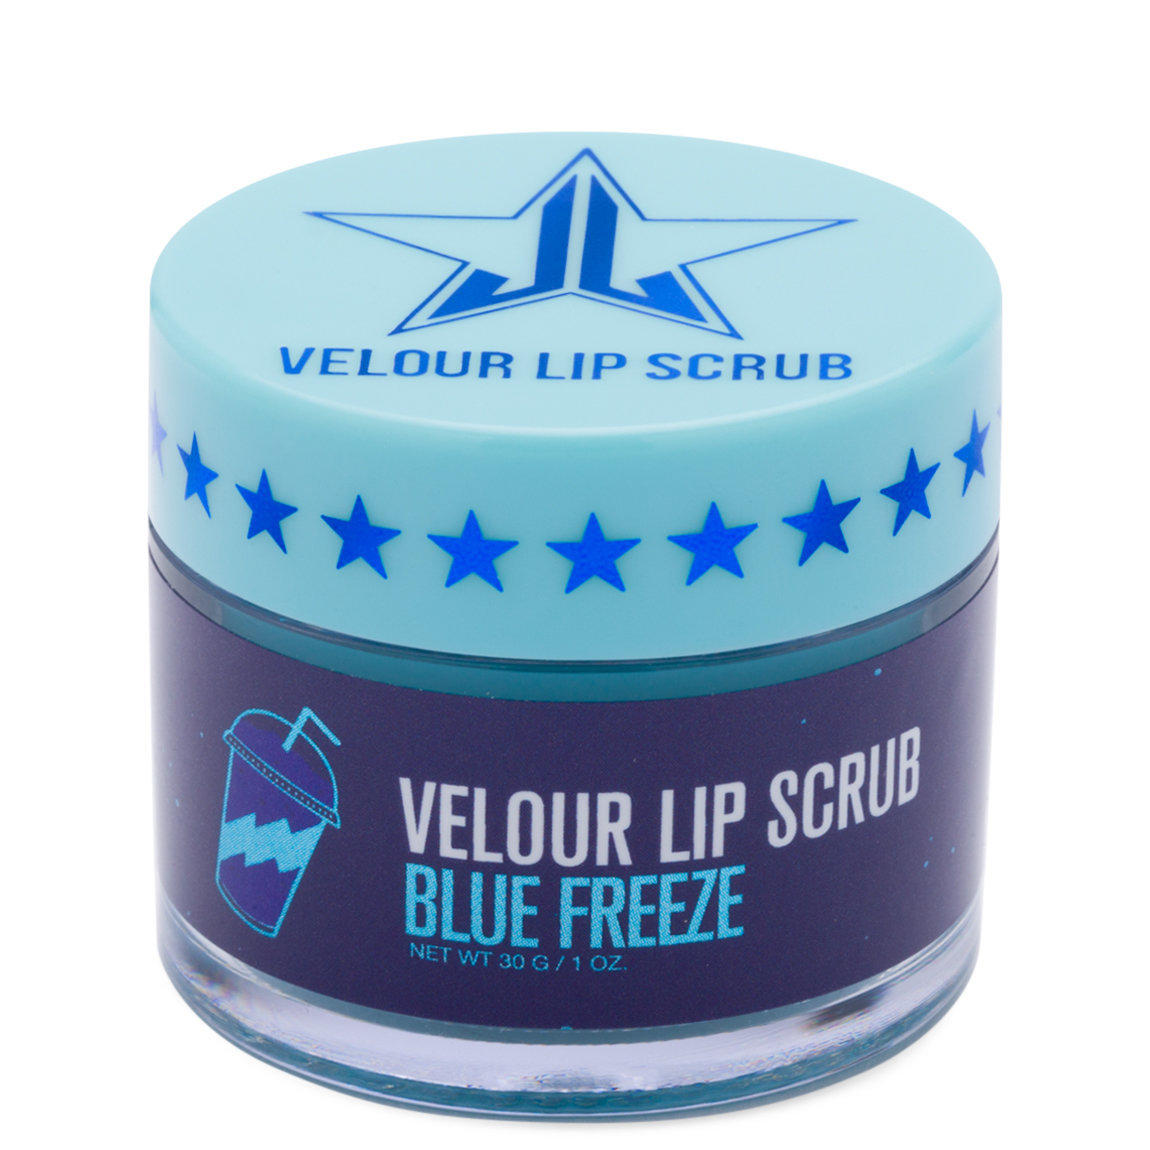 Jefree Star Velour Lip Scrub Blue freeze